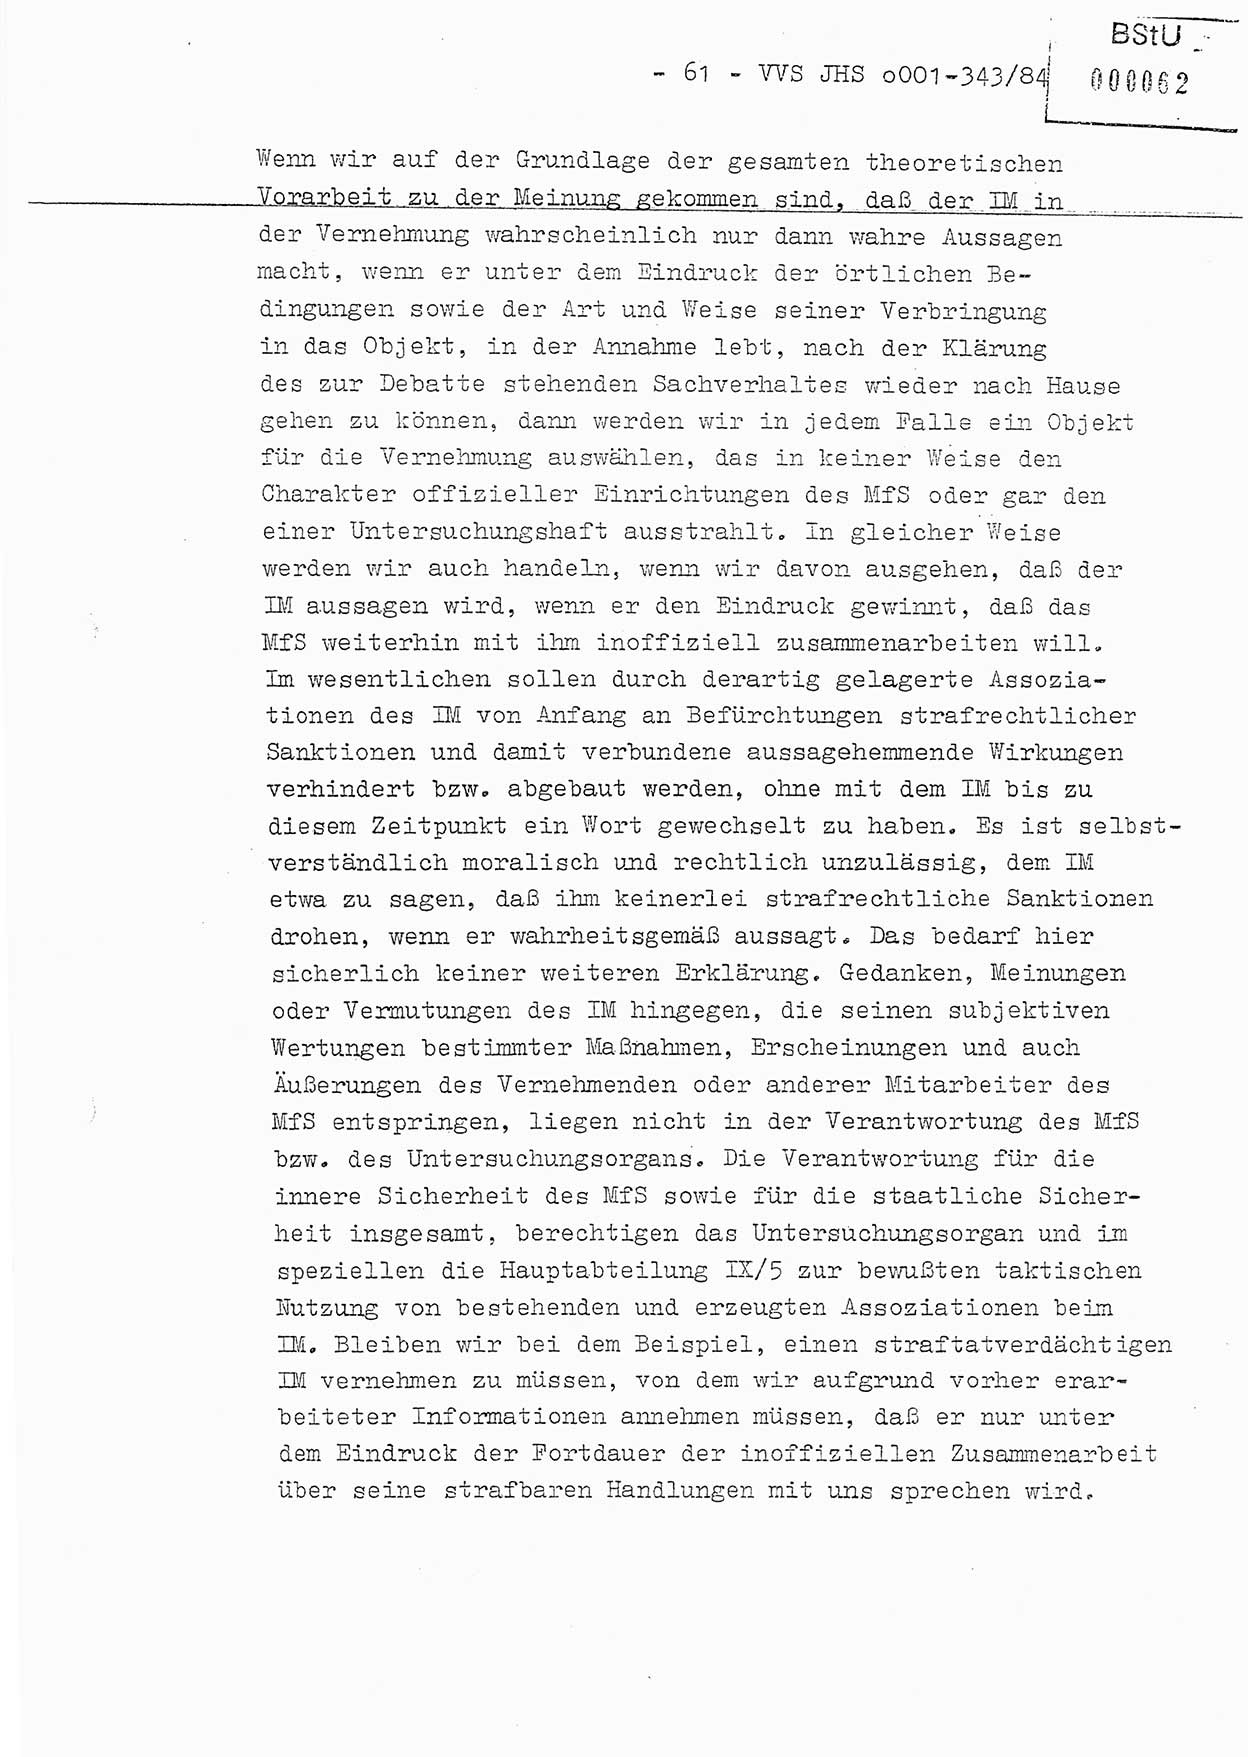 Diplomarbeit, Oberleutnant Bernd Michael (HA Ⅸ/5), Oberleutnant Peter Felber (HA IX/5), Ministerium für Staatssicherheit (MfS) [Deutsche Demokratische Republik (DDR)], Juristische Hochschule (JHS), Vertrauliche Verschlußsache (VVS) o001-343/84, Potsdam 1985, Seite 61 (Dipl.-Arb. MfS DDR JHS VVS o001-343/84 1985, S. 61)